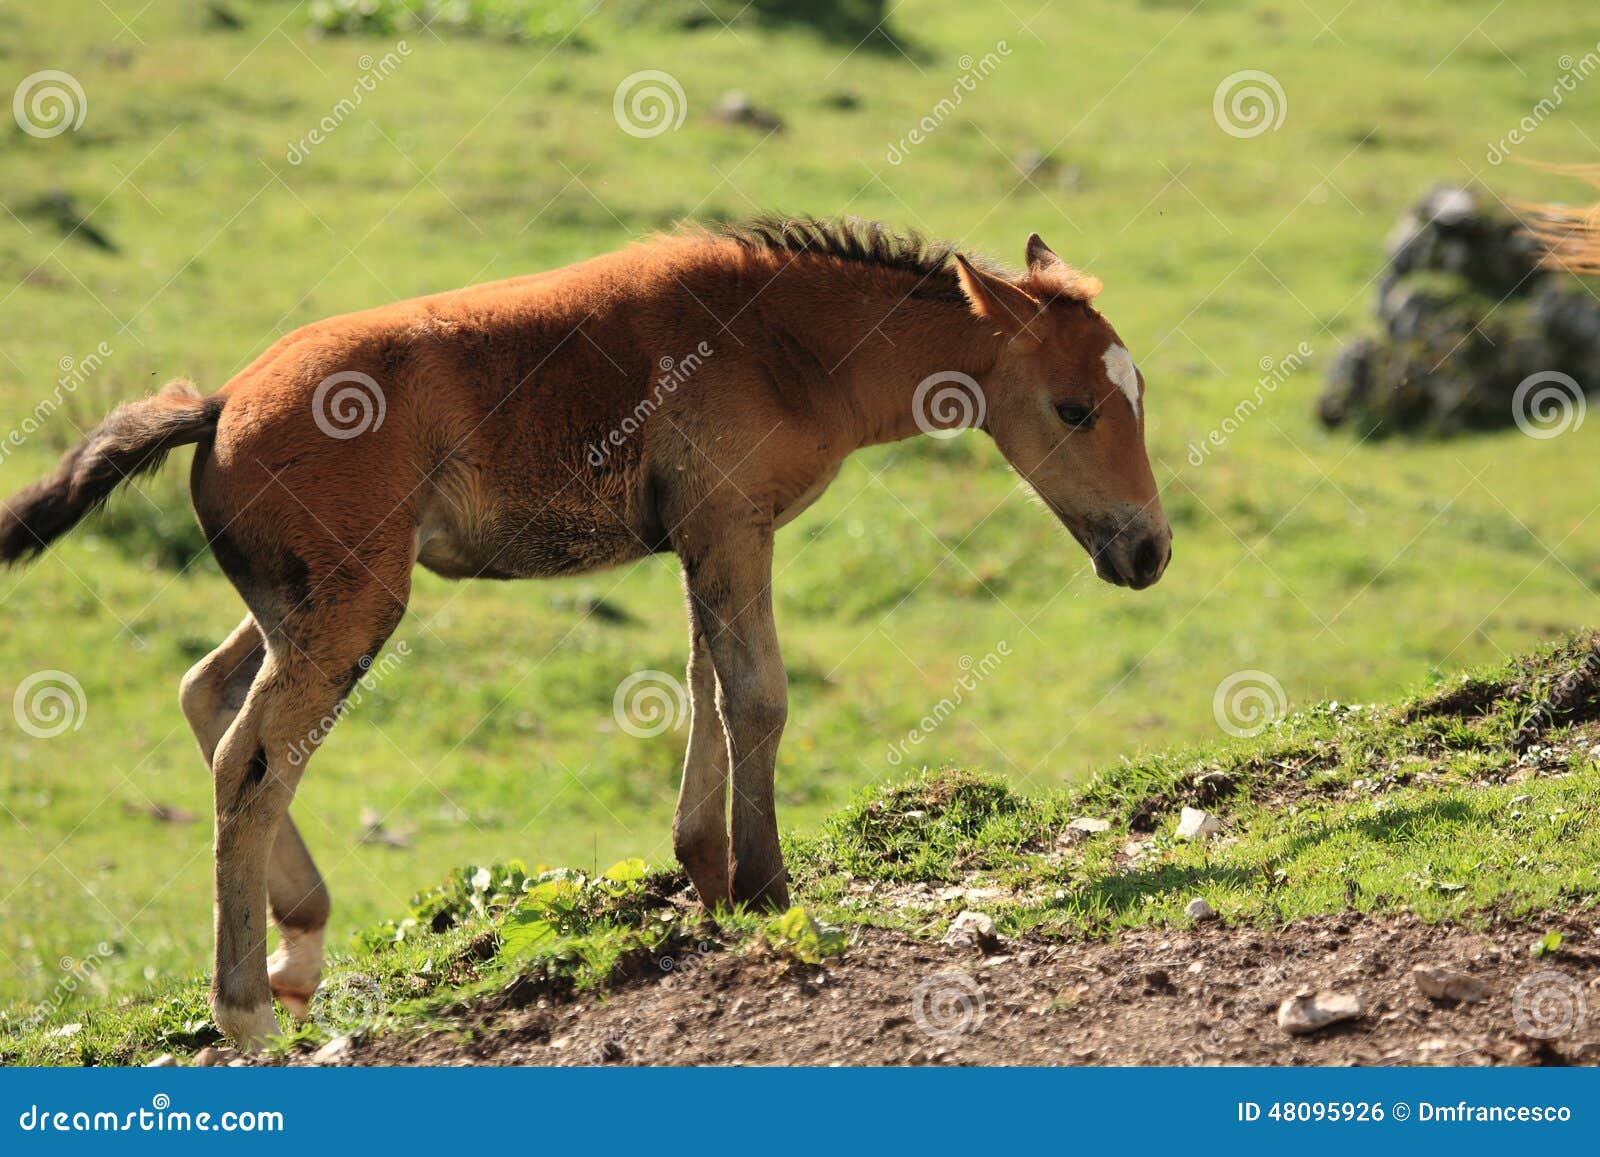 Italian Domestic horses stock photo. Image of animal - 48095926